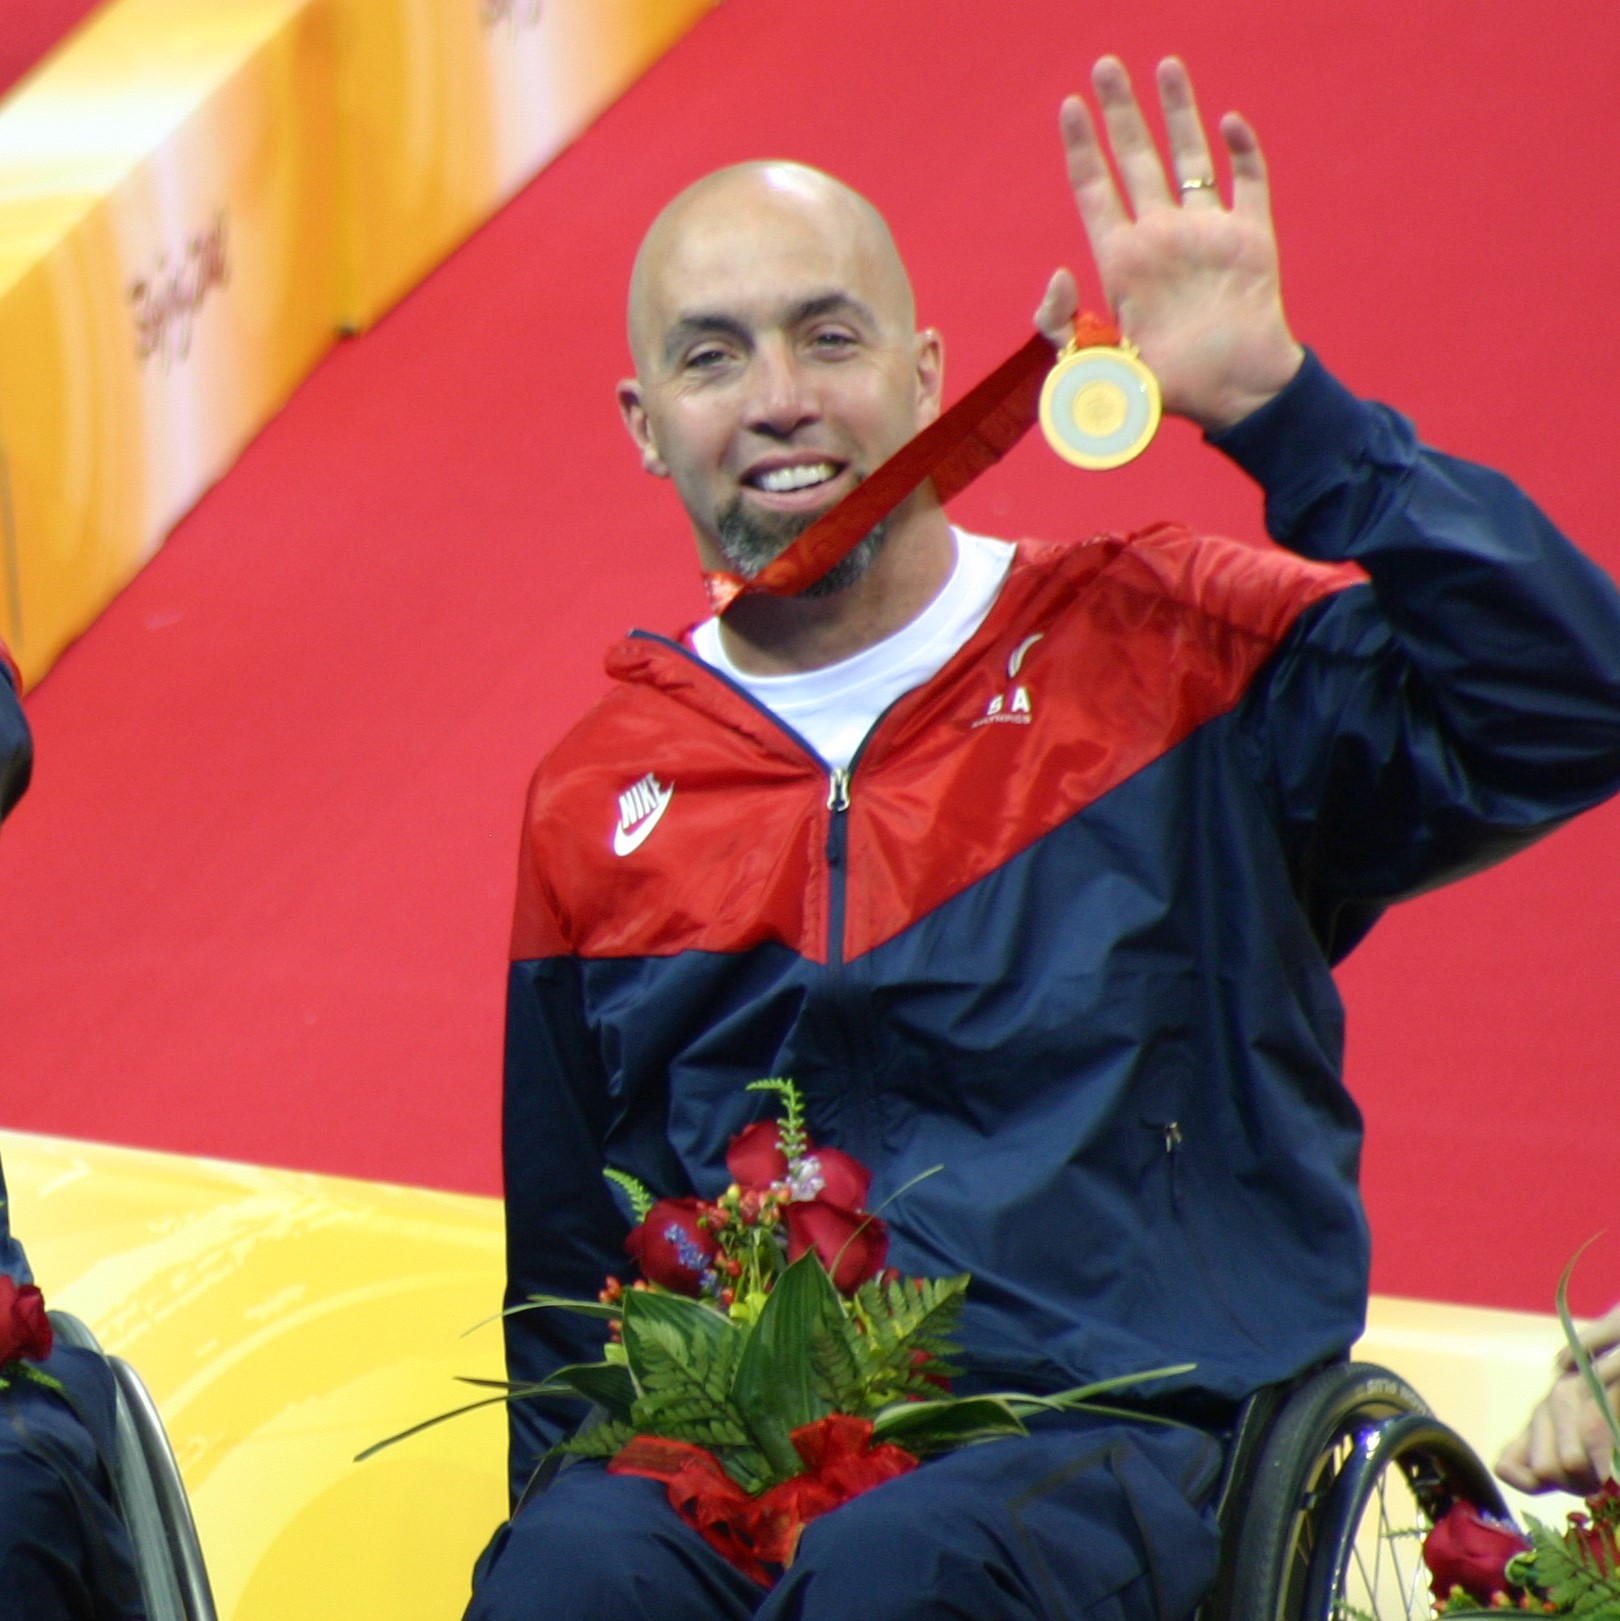 Bryan Kirkland wins gold in Paralympics